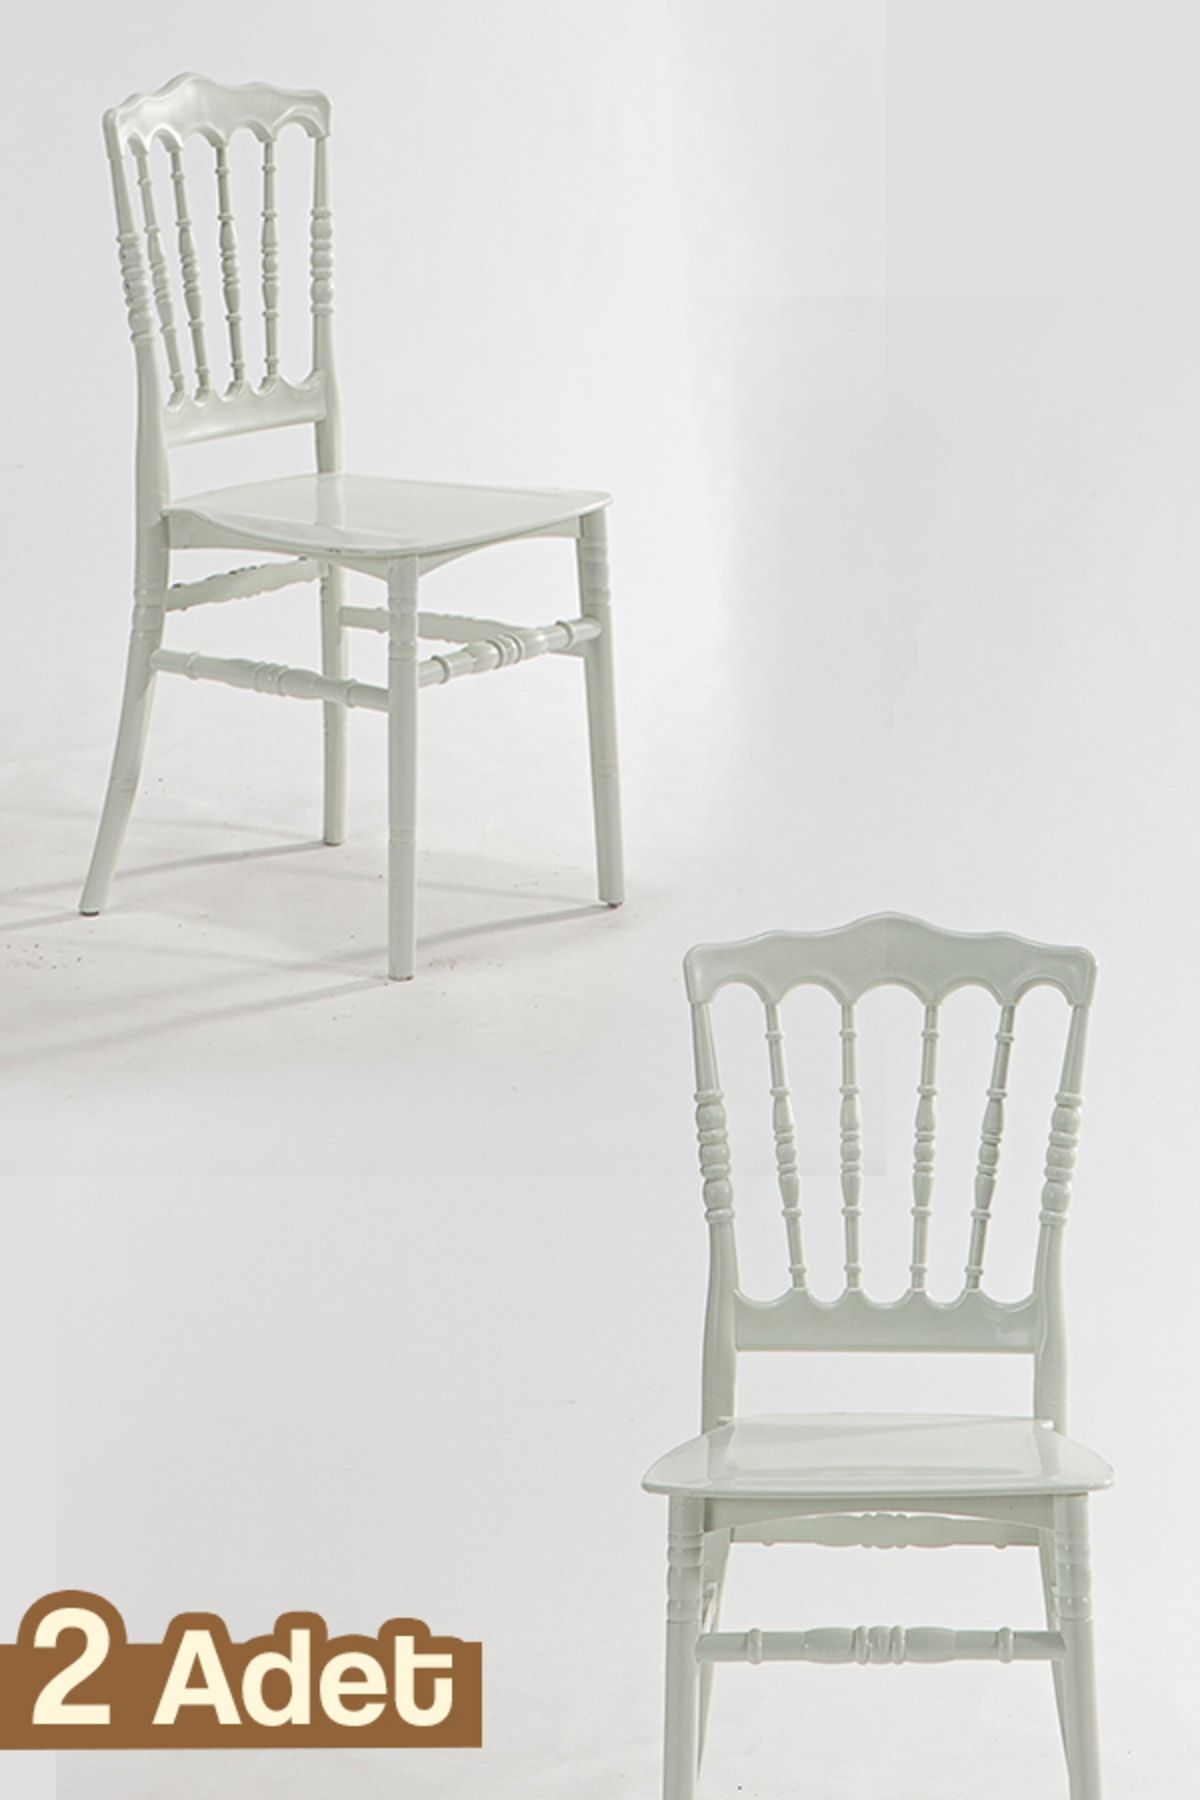 MOBETTO Miray Mutfak Sandalye 2 Adet -beyaz